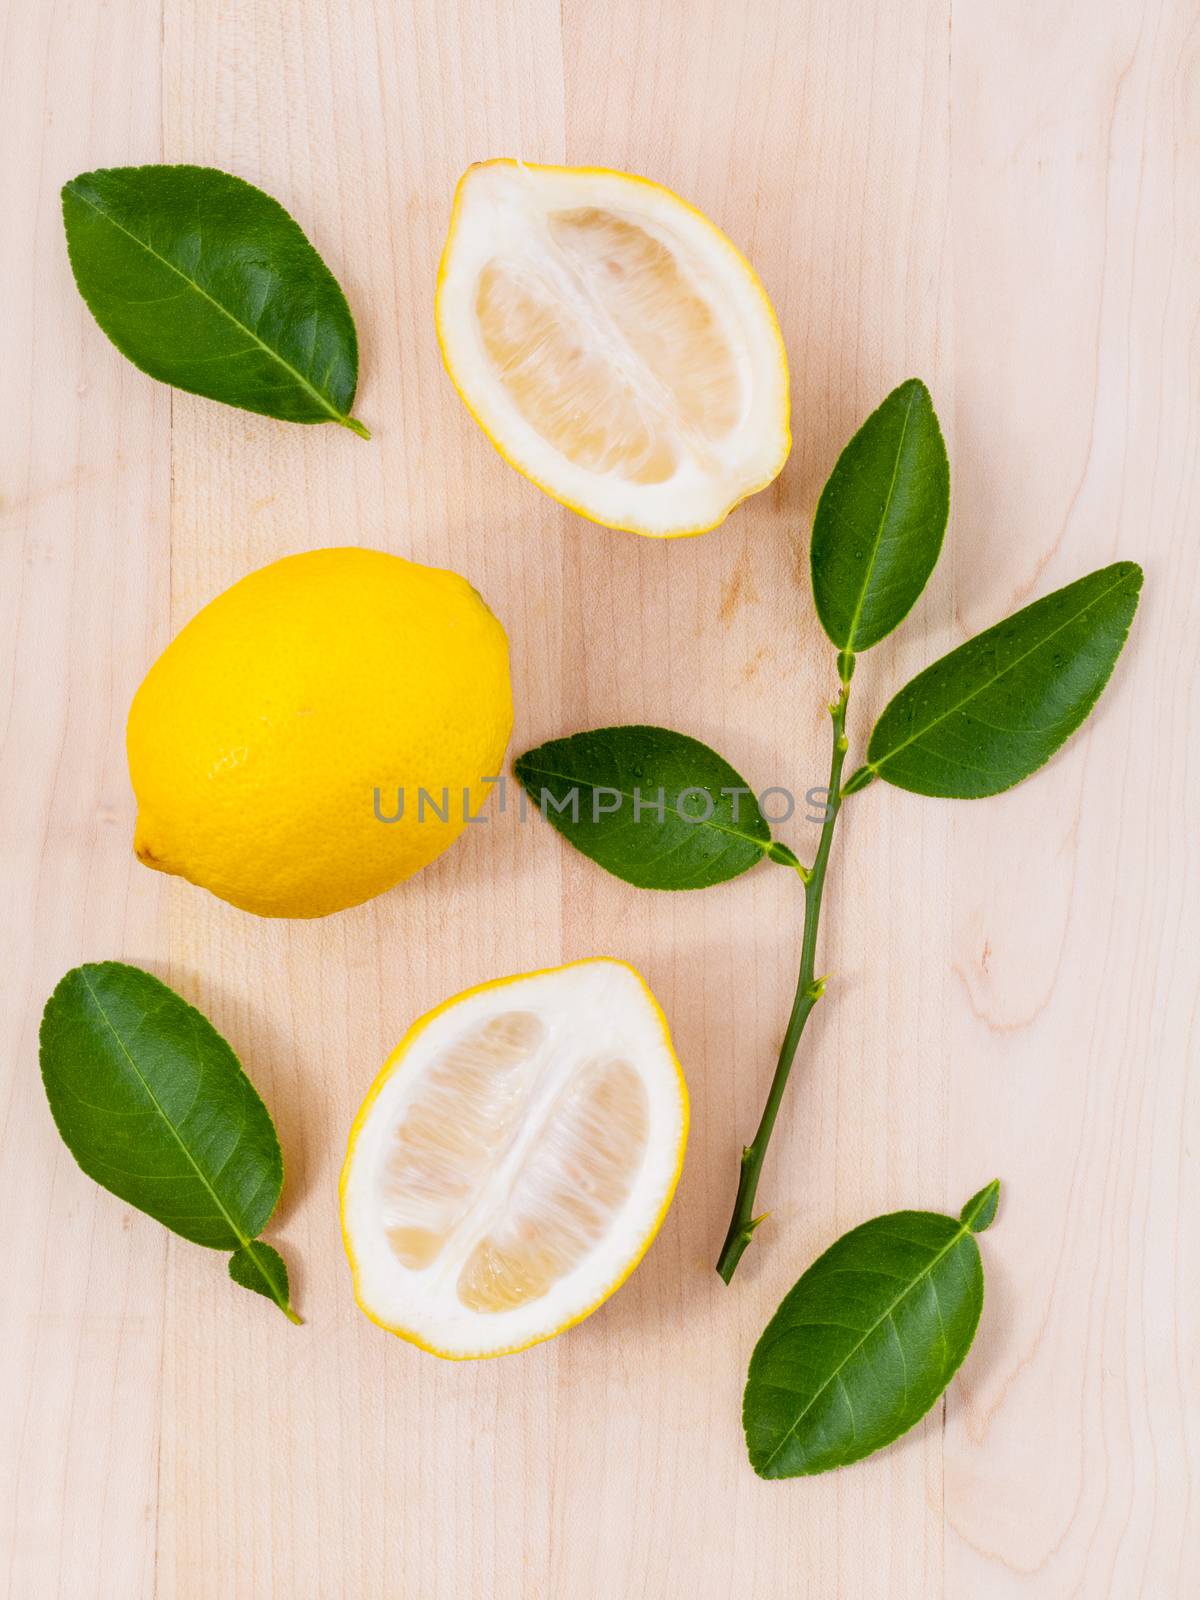 Fresh lemons and o lemons  slice on wooden background with  lemons  leaf.